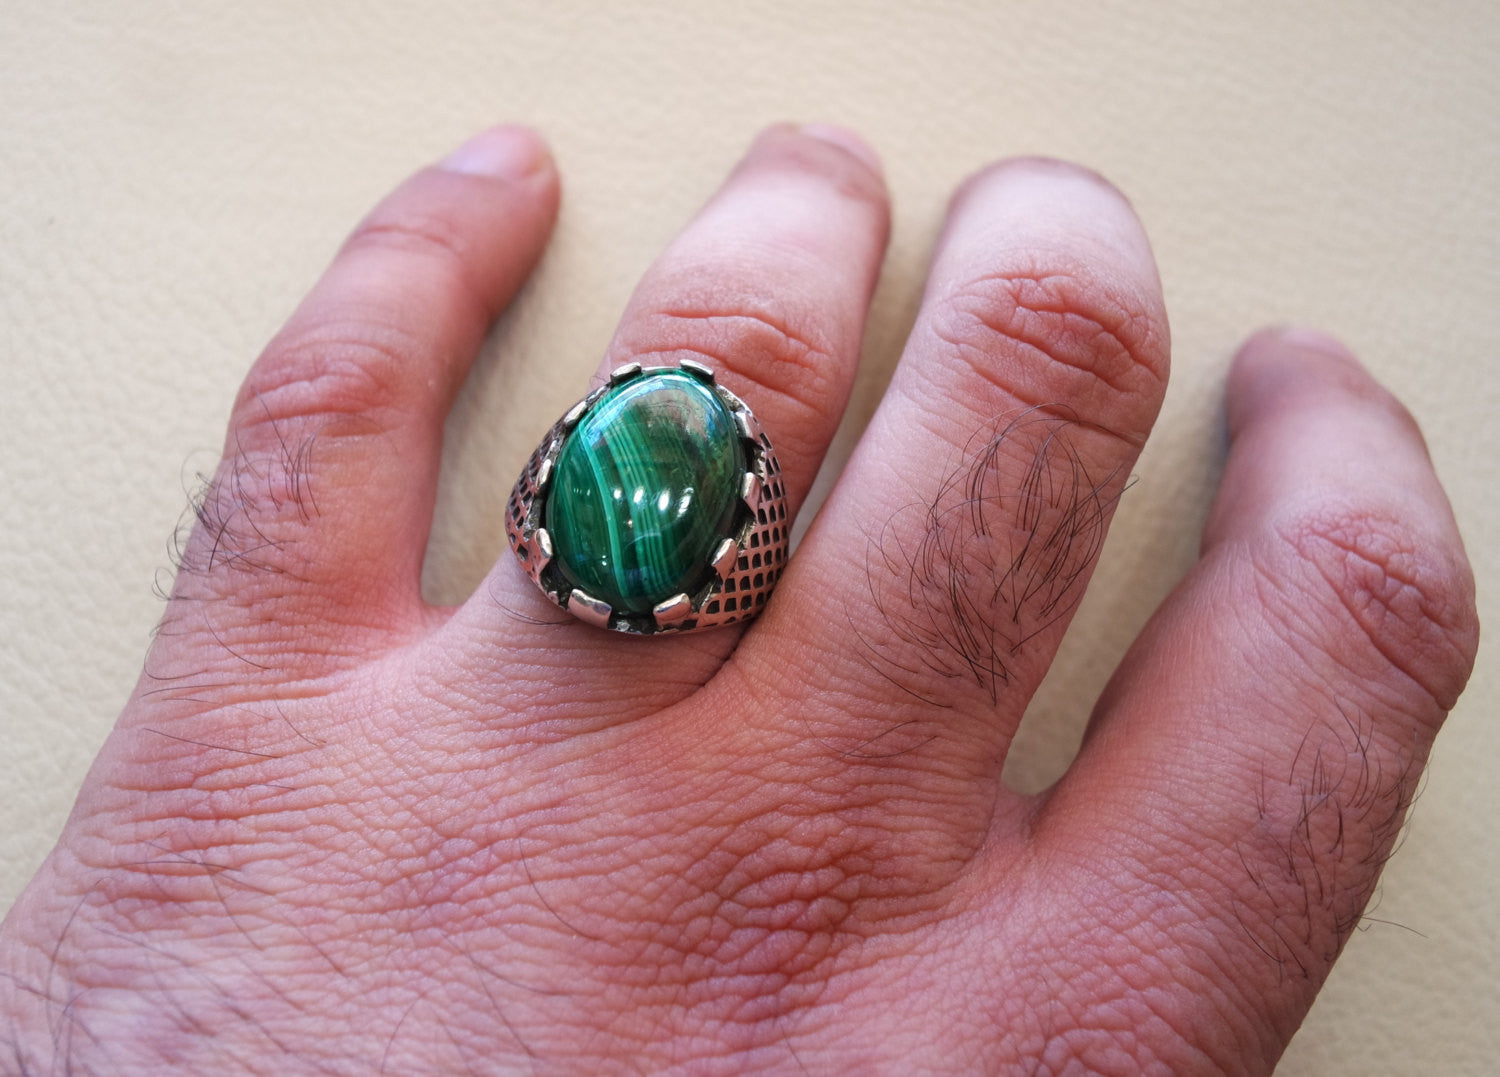 natural malachite man ring high quality green striped cabochon semi precious stone sterling silver 925  ottoman arab style heavy men jewelry